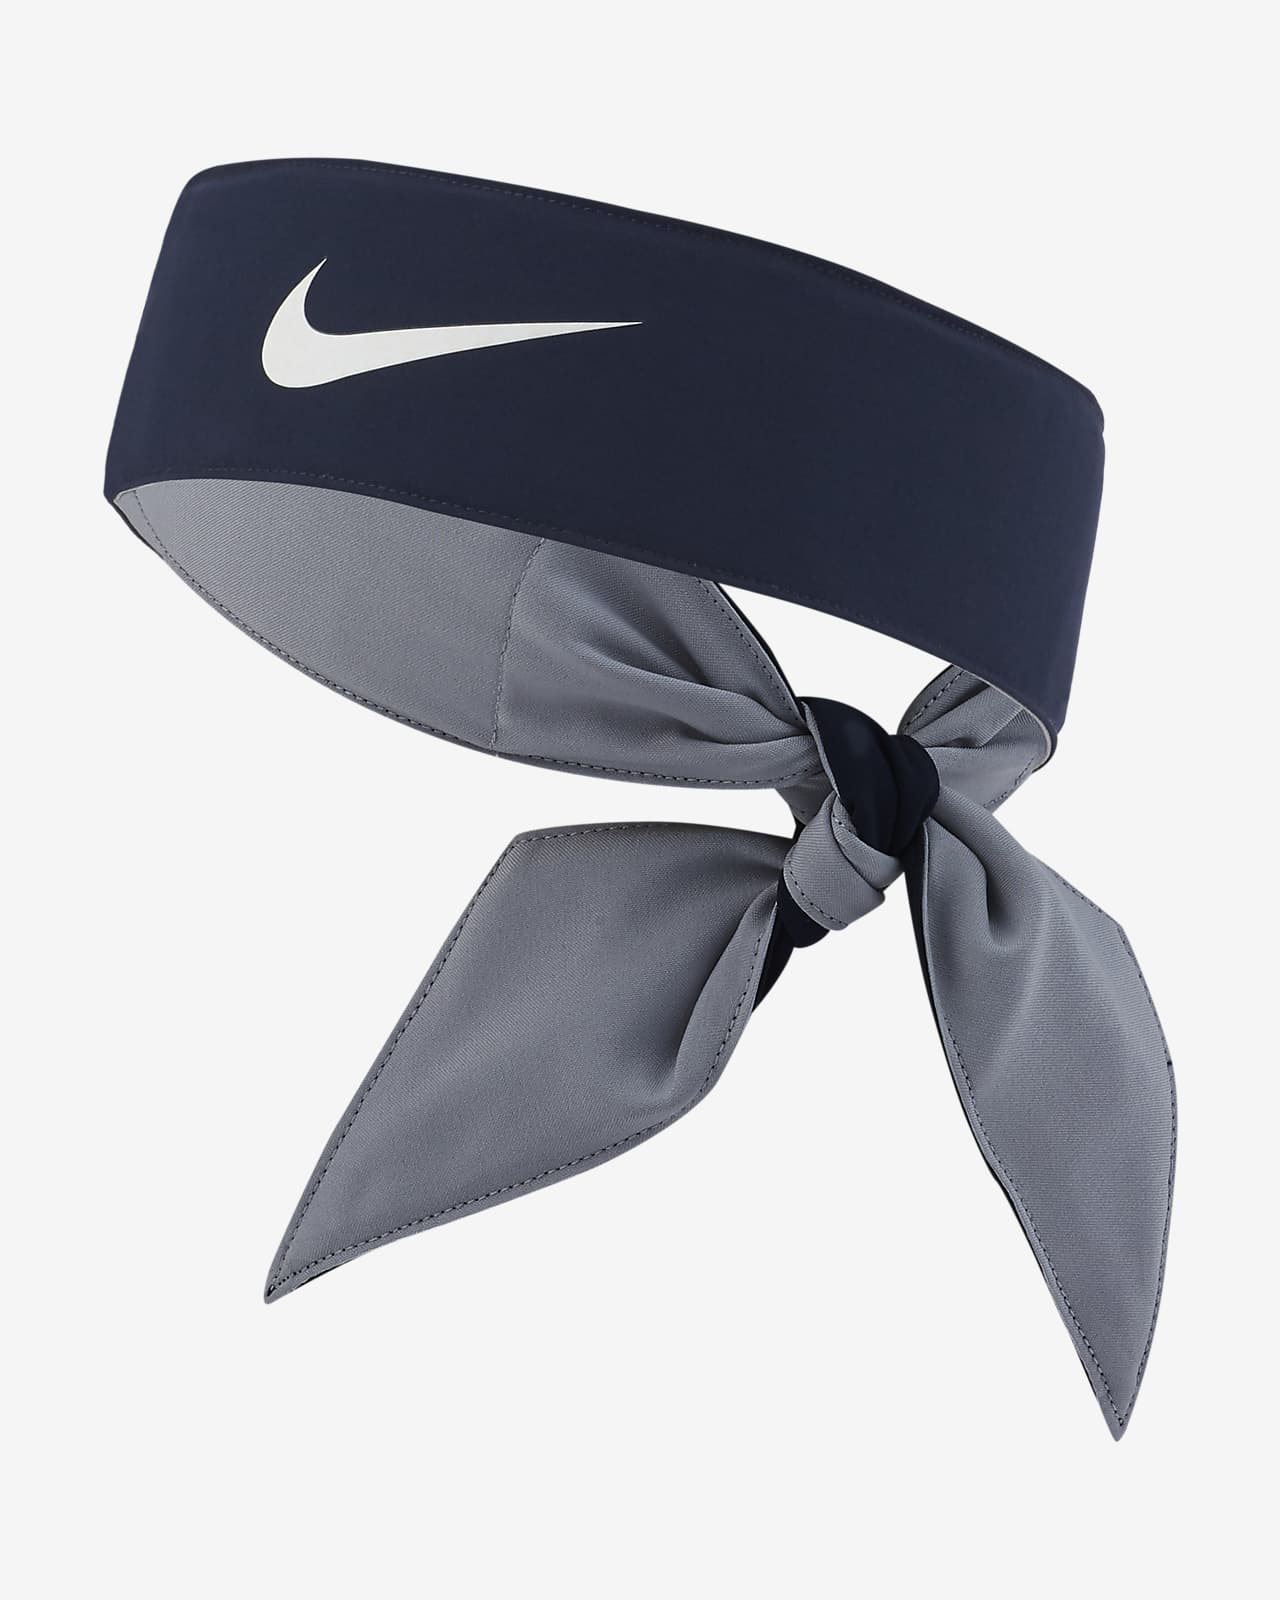 Bandeau Nike Tennis Blanc/Noir